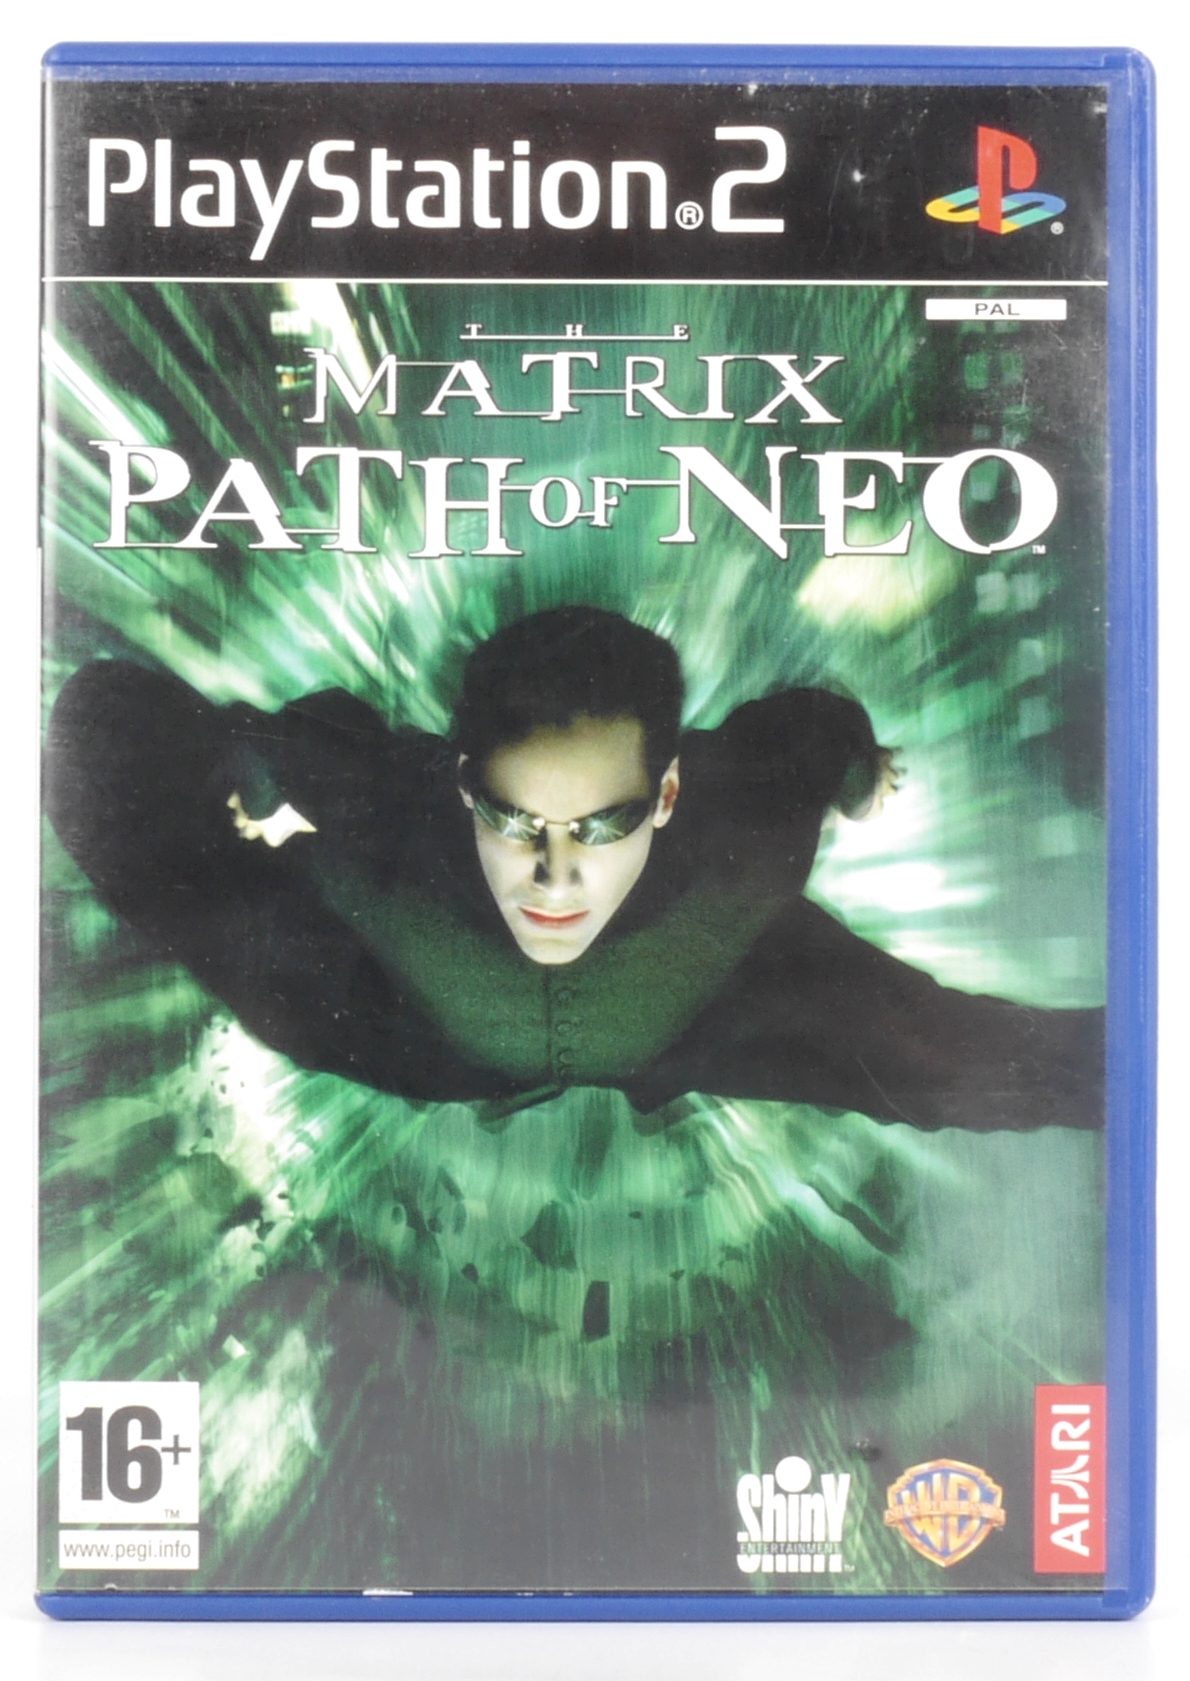 Matrix path of neo iso